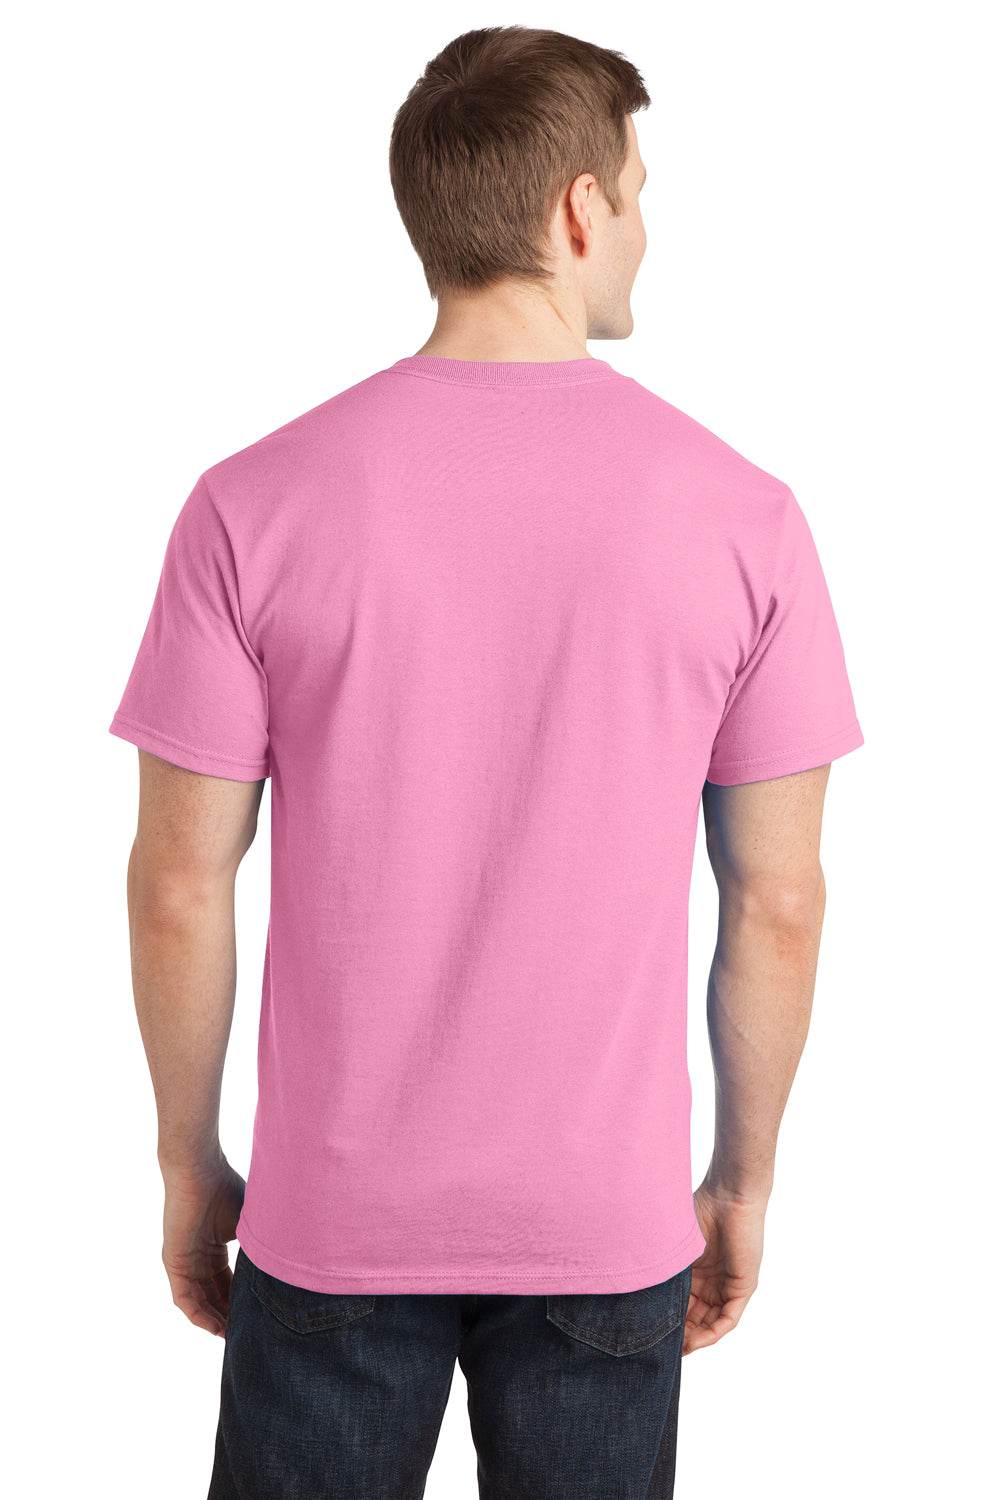 Port & Company PC150 Mens Short Sleeve Crewneck T-Shirt Candy Pink Back